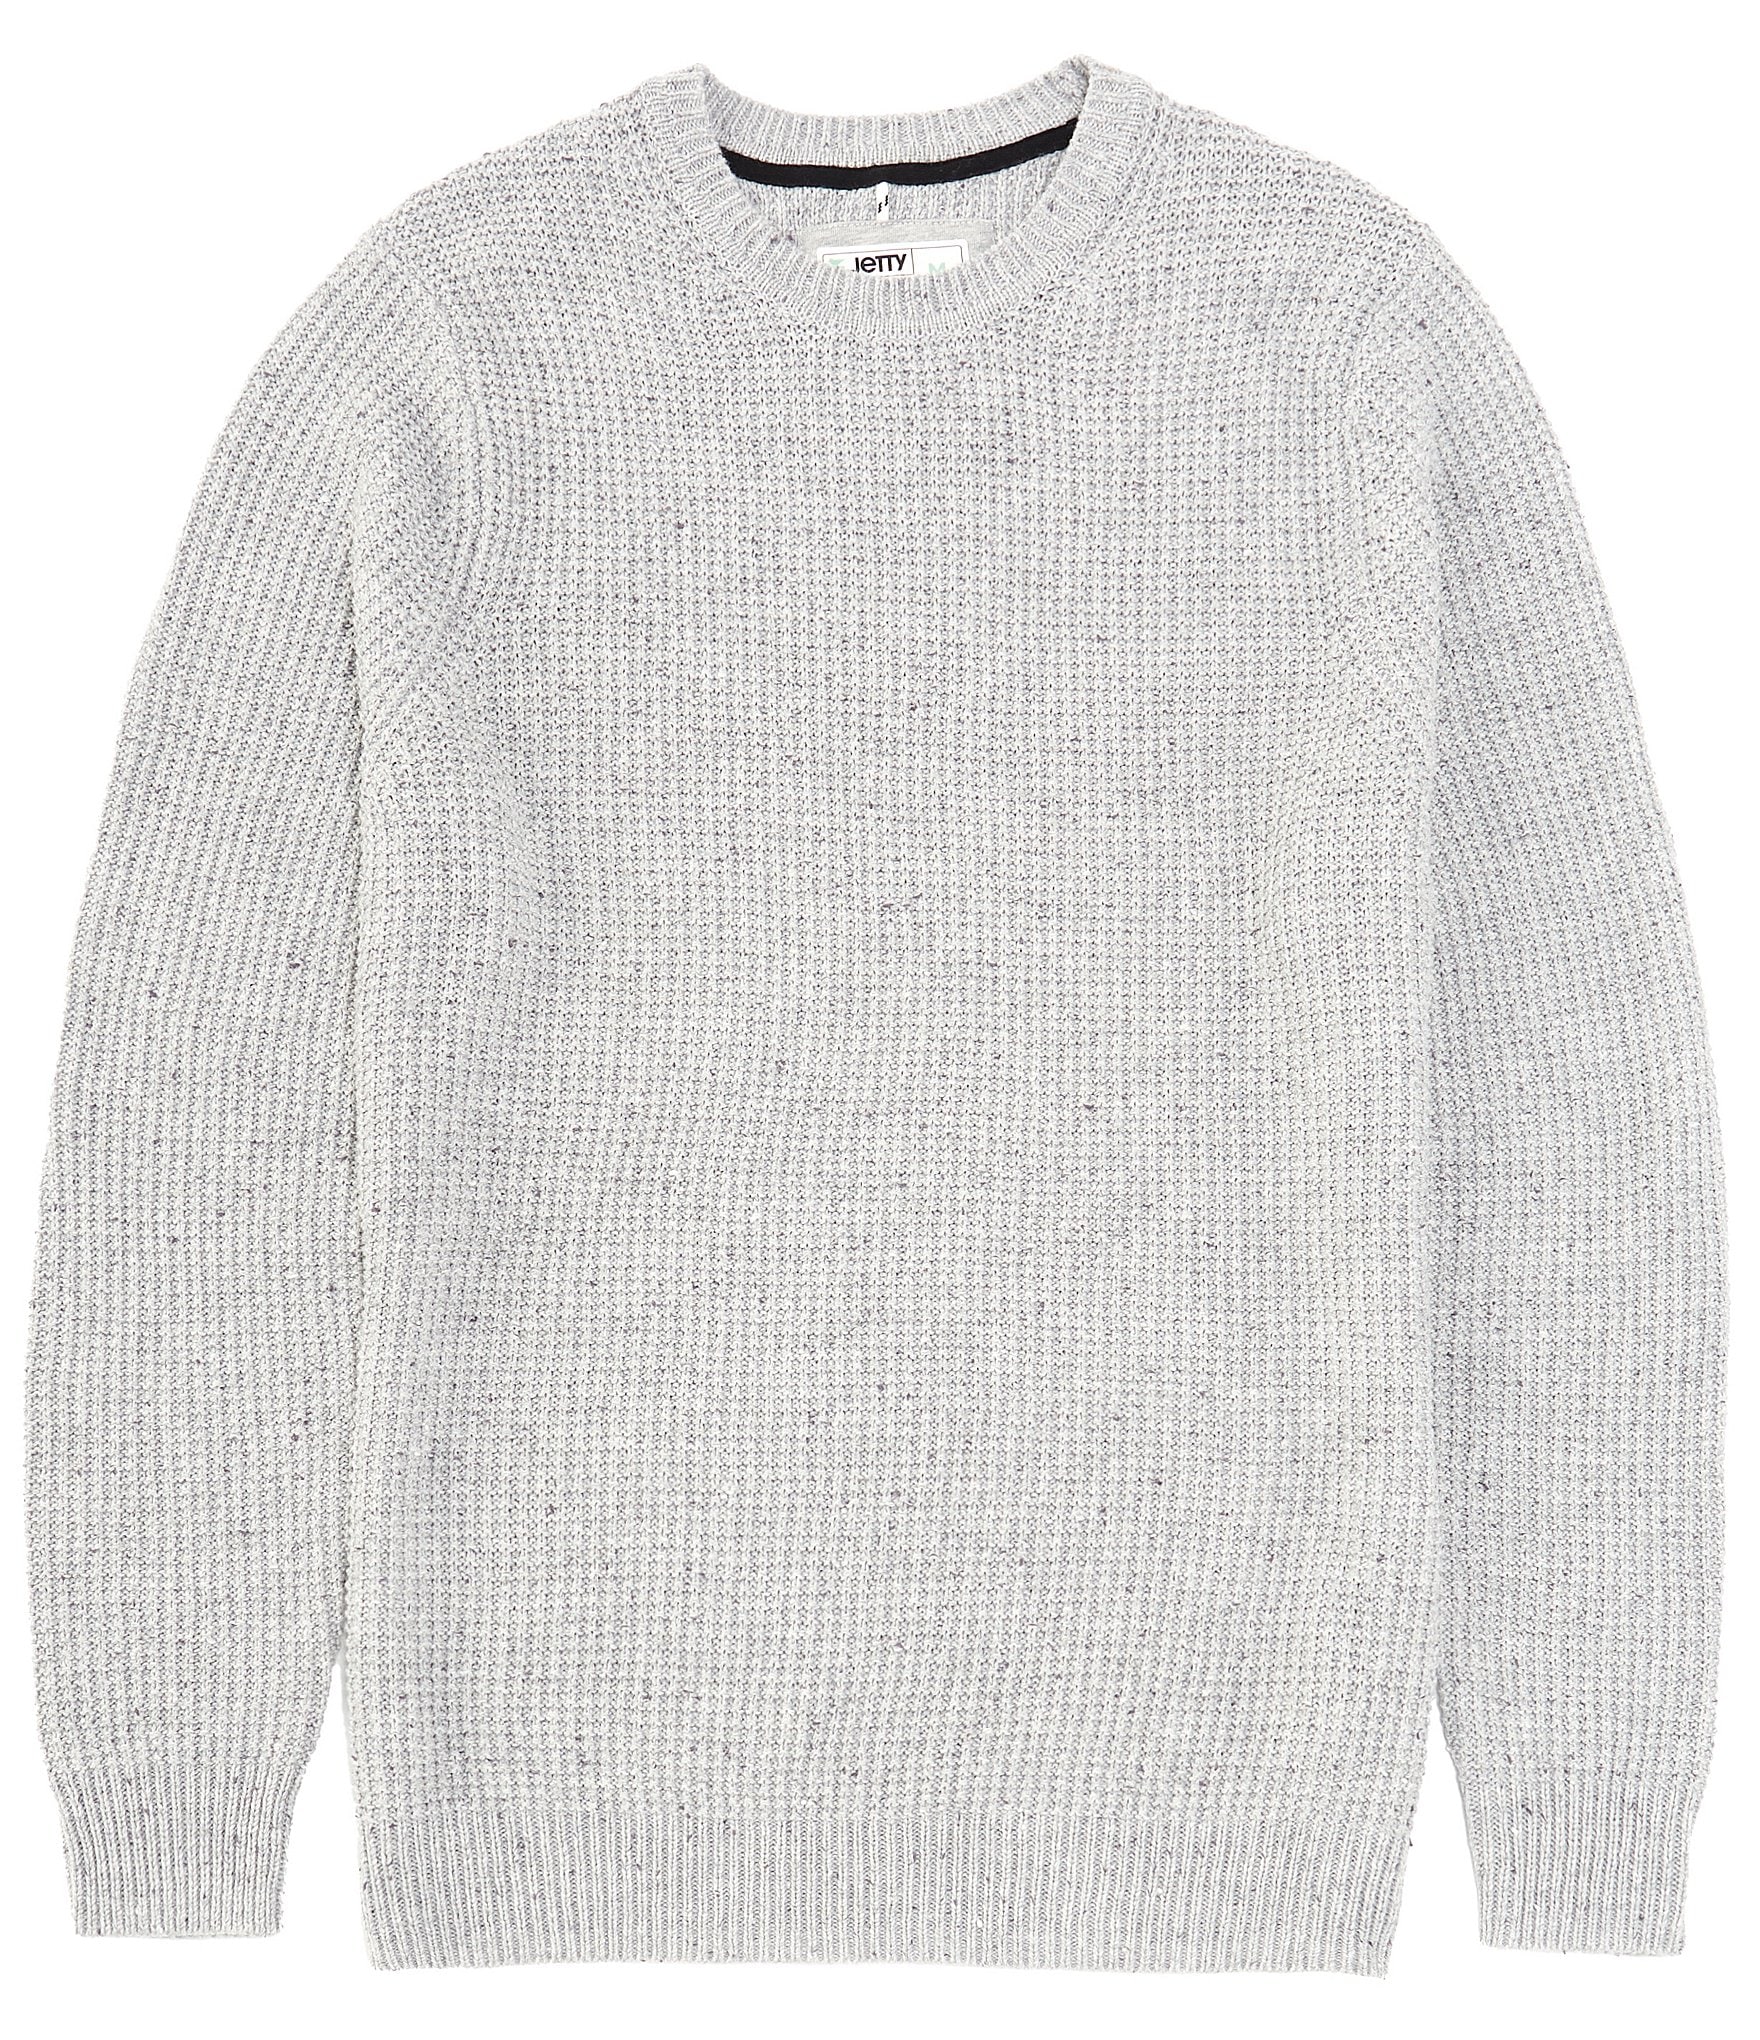 JETTY Paragon Oystex Sweater | Dillard's